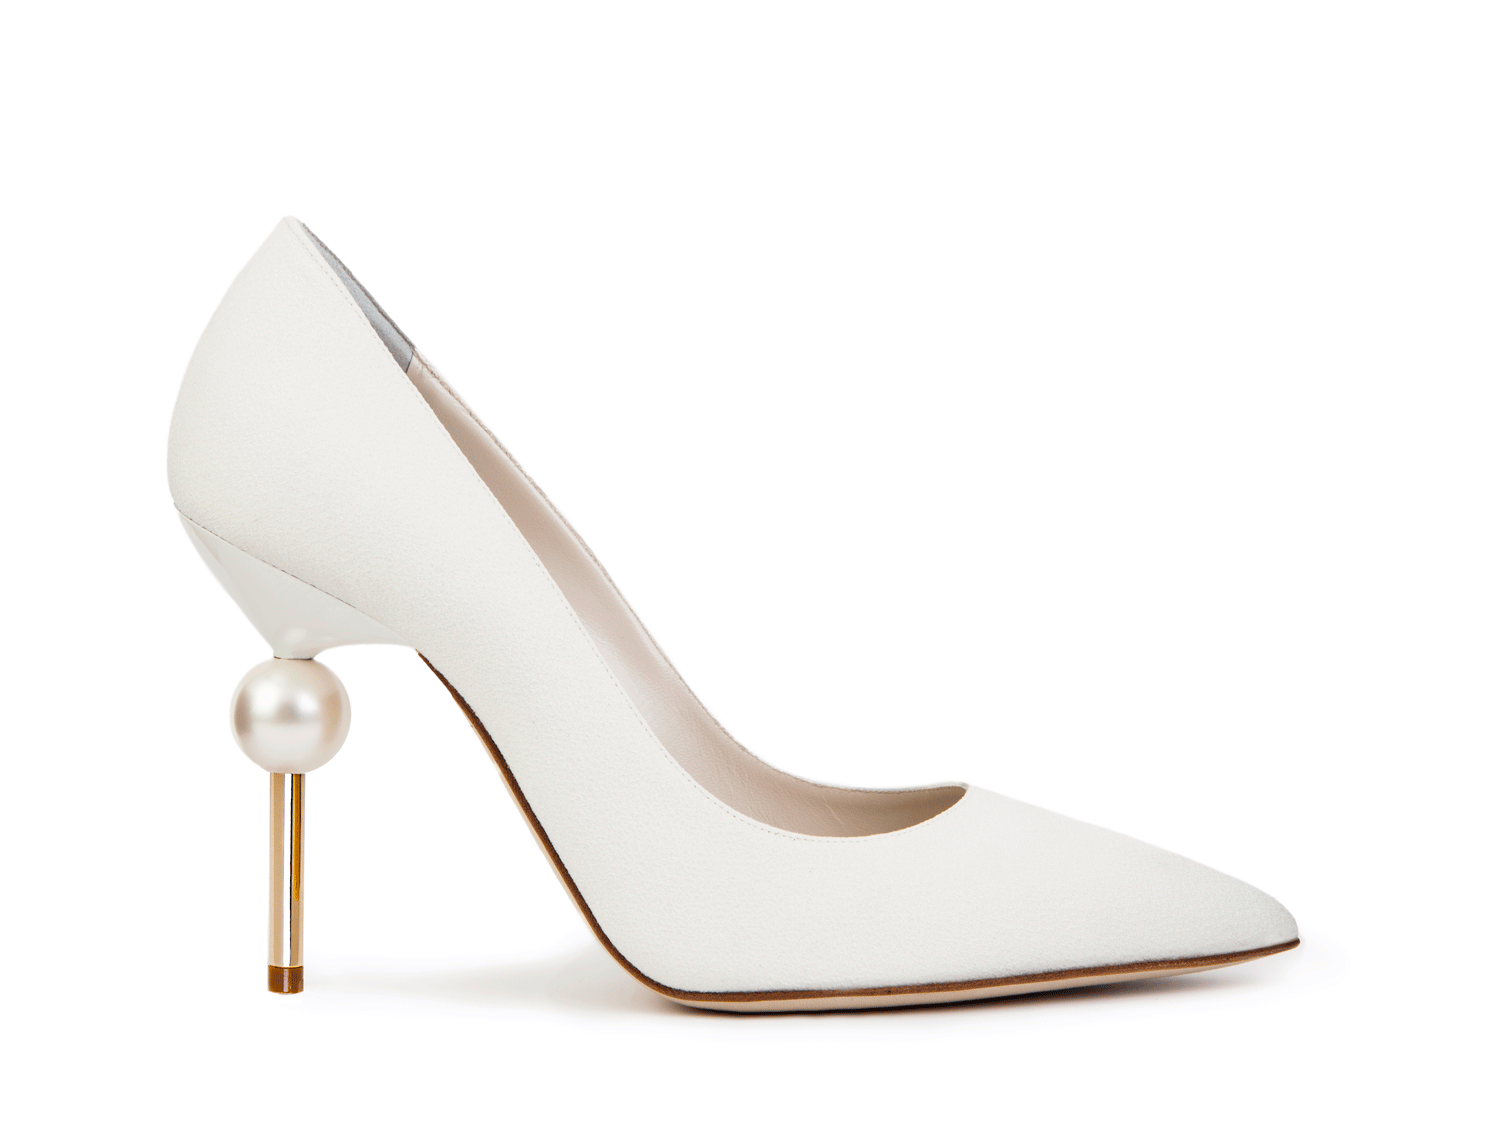 Shop Luxury Bridal Shoes & Wedding Heels